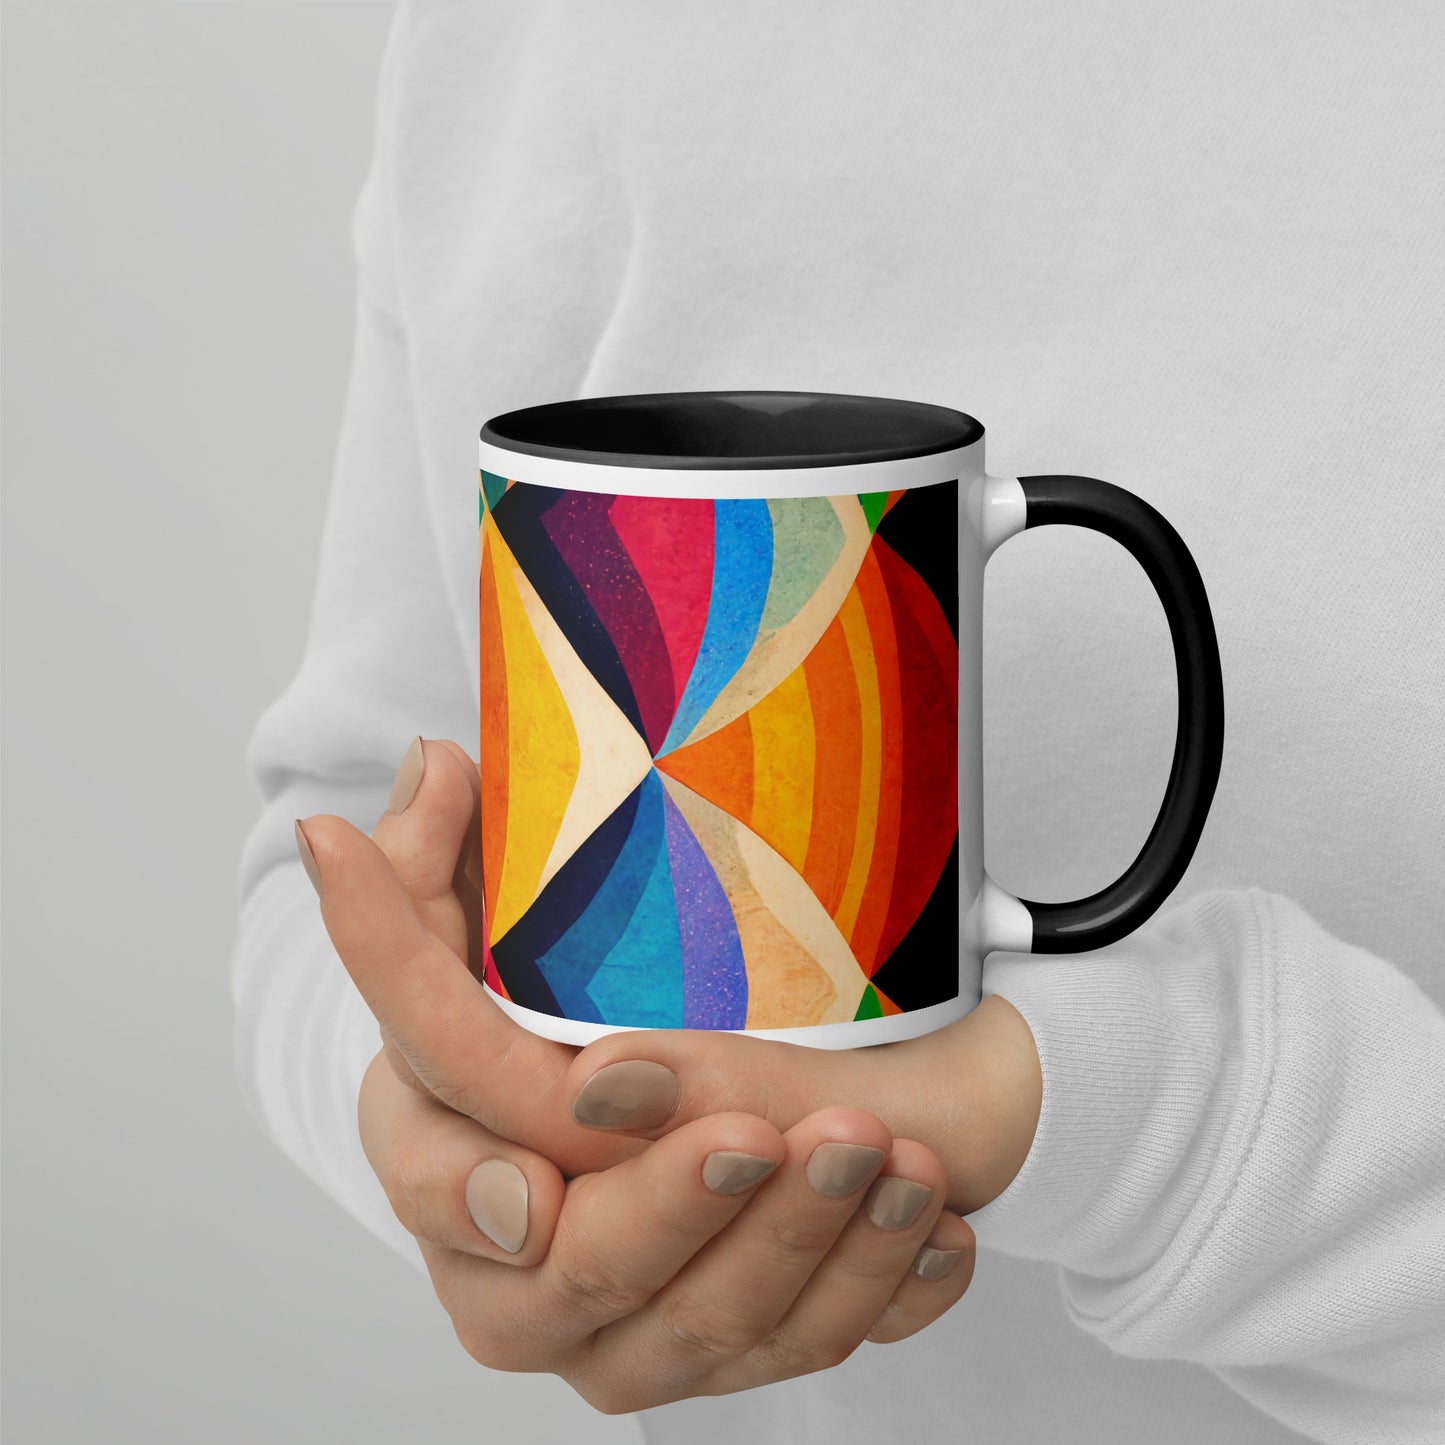 Symmetrical Illusion Ceramic Mug with Color Inside